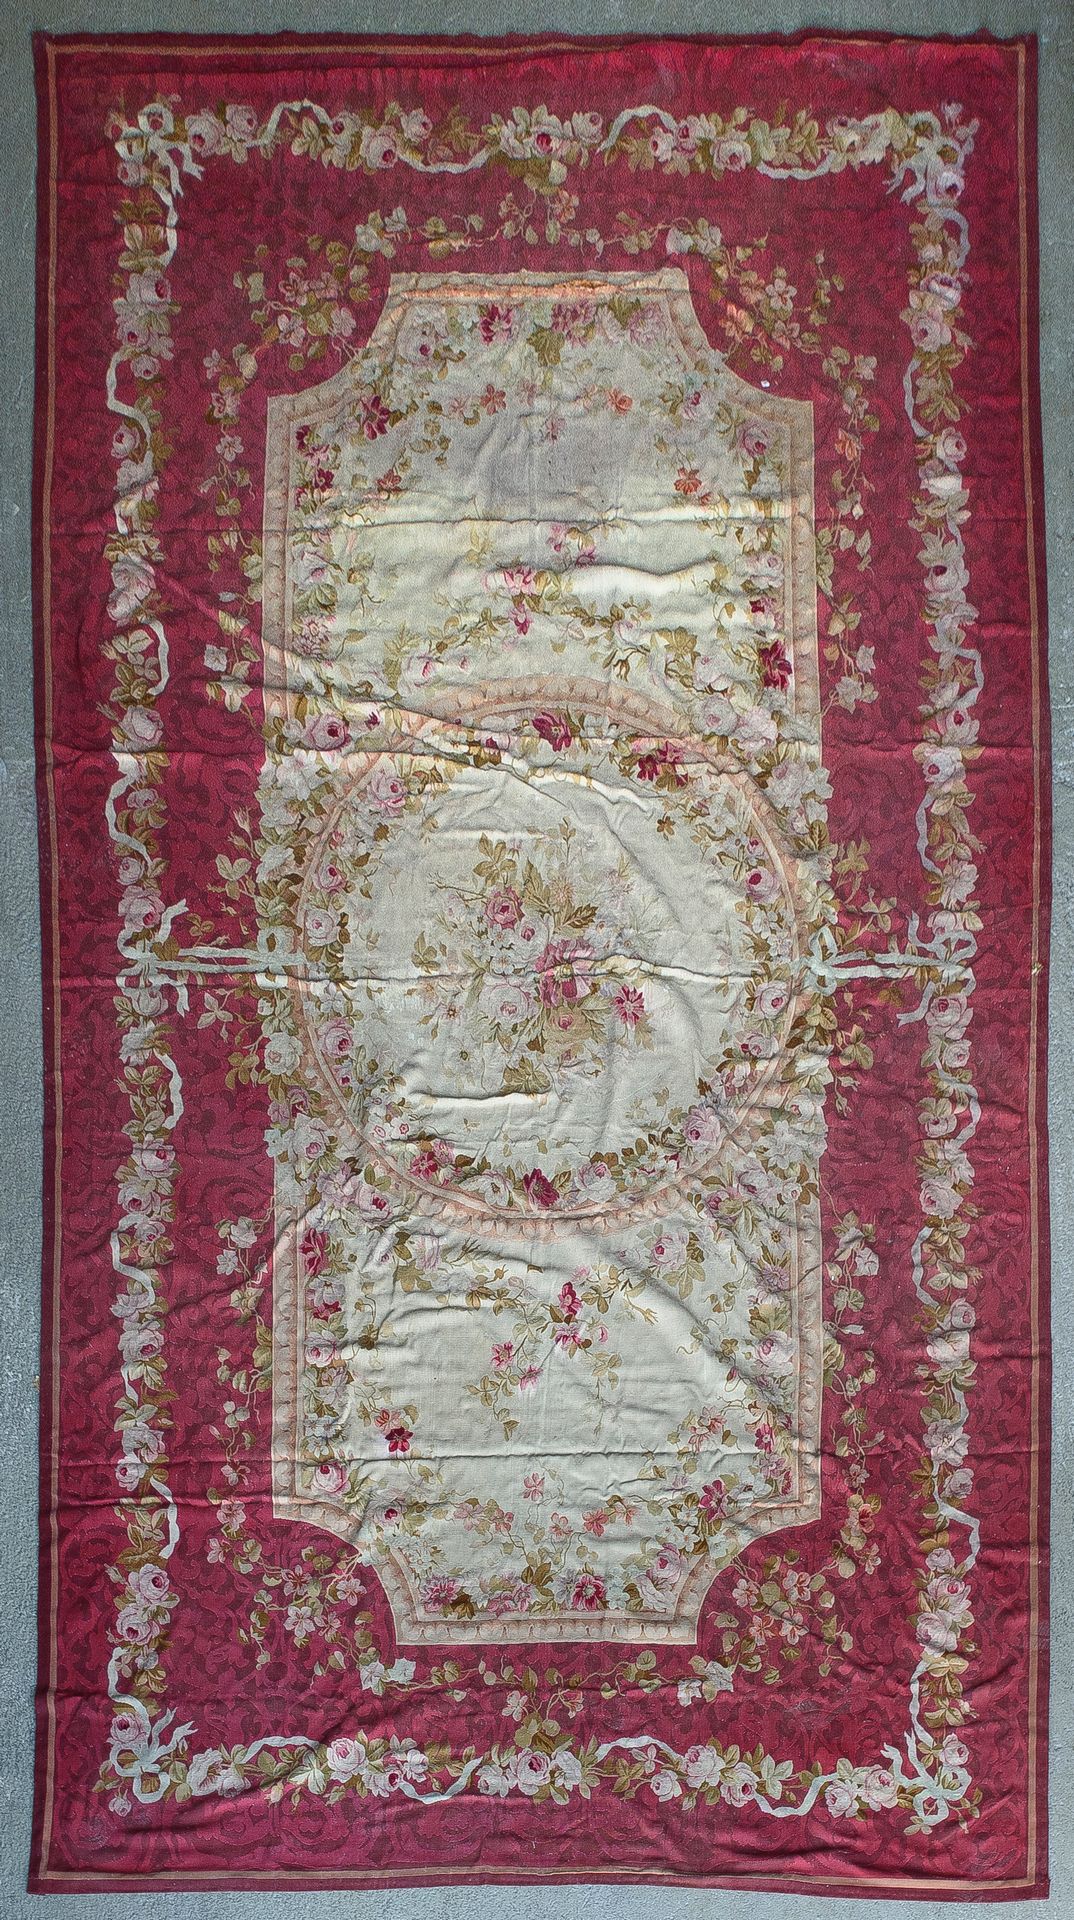 Null 奥布松，拿破仑三世时期

大型精细挂毯，框架内装饰有粉色调的花朵，葡萄酒色的花边

600 x 300 cm

8厘米处有轻微撕裂